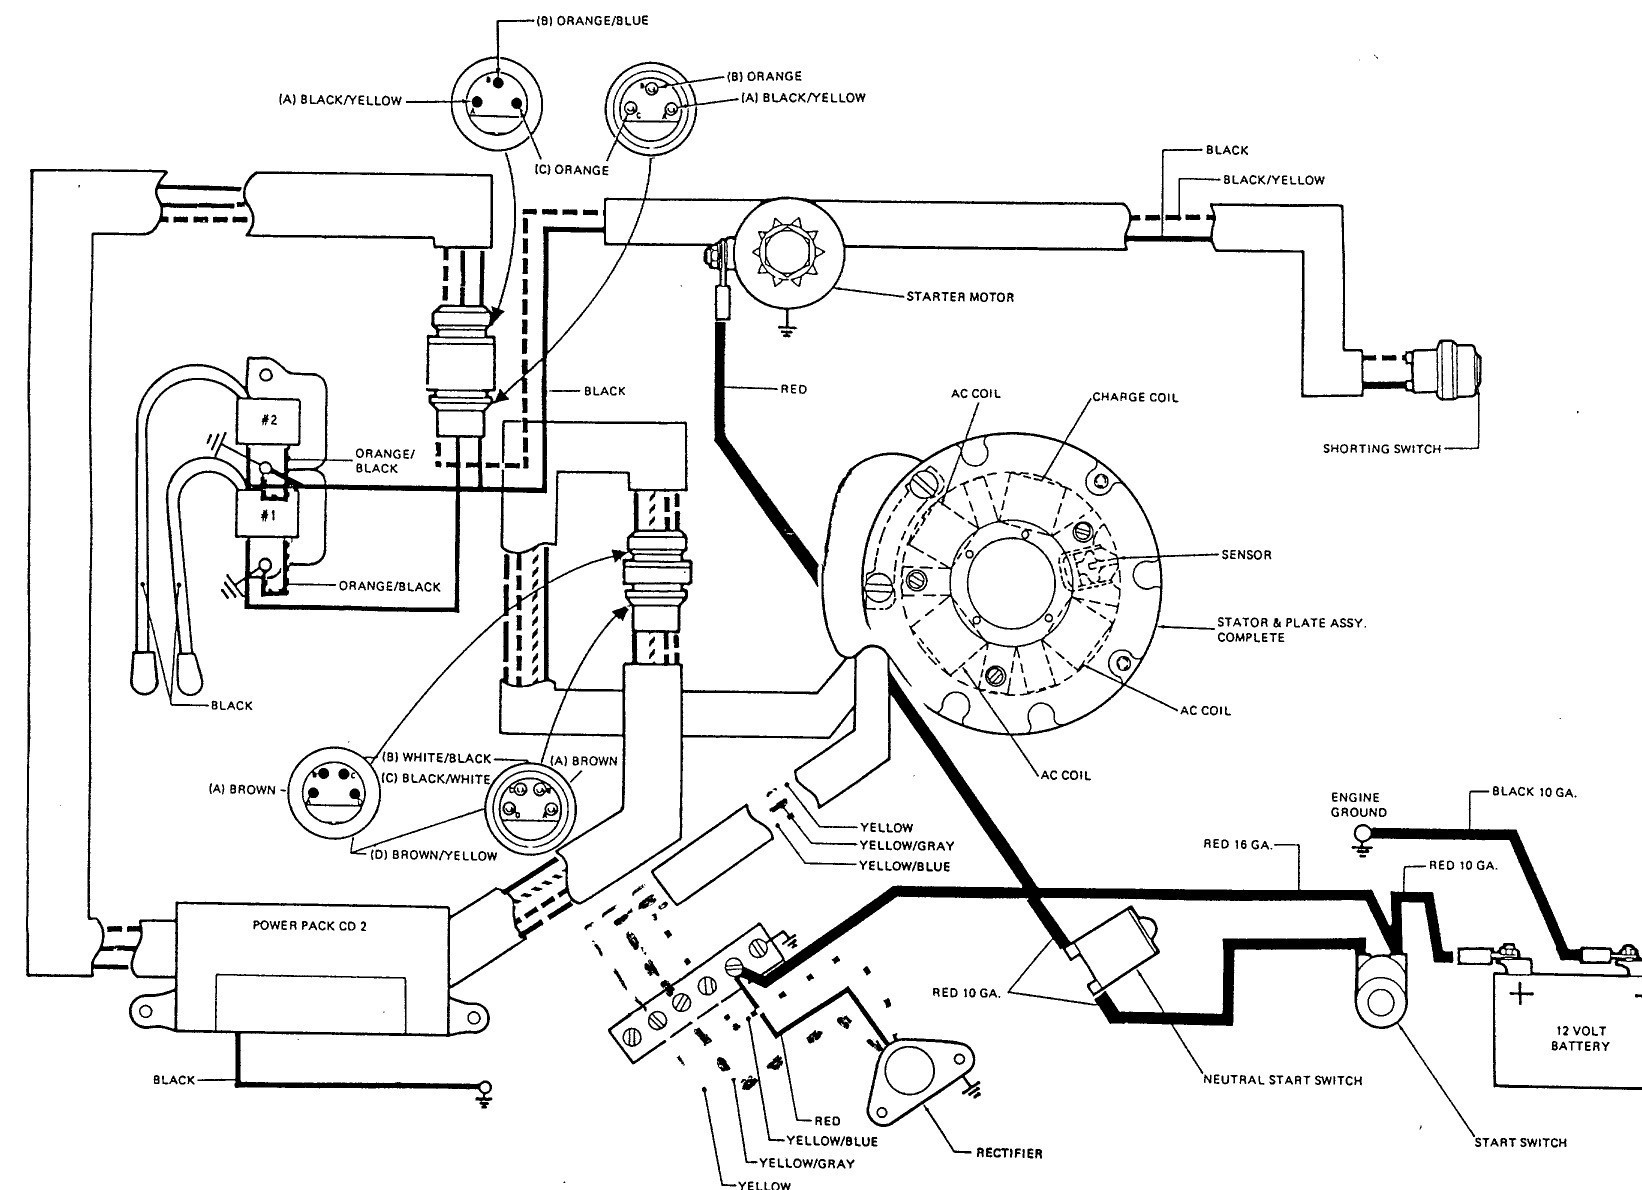 wiring diagram electric choke best electric choke wiring diagram rh wheathill co